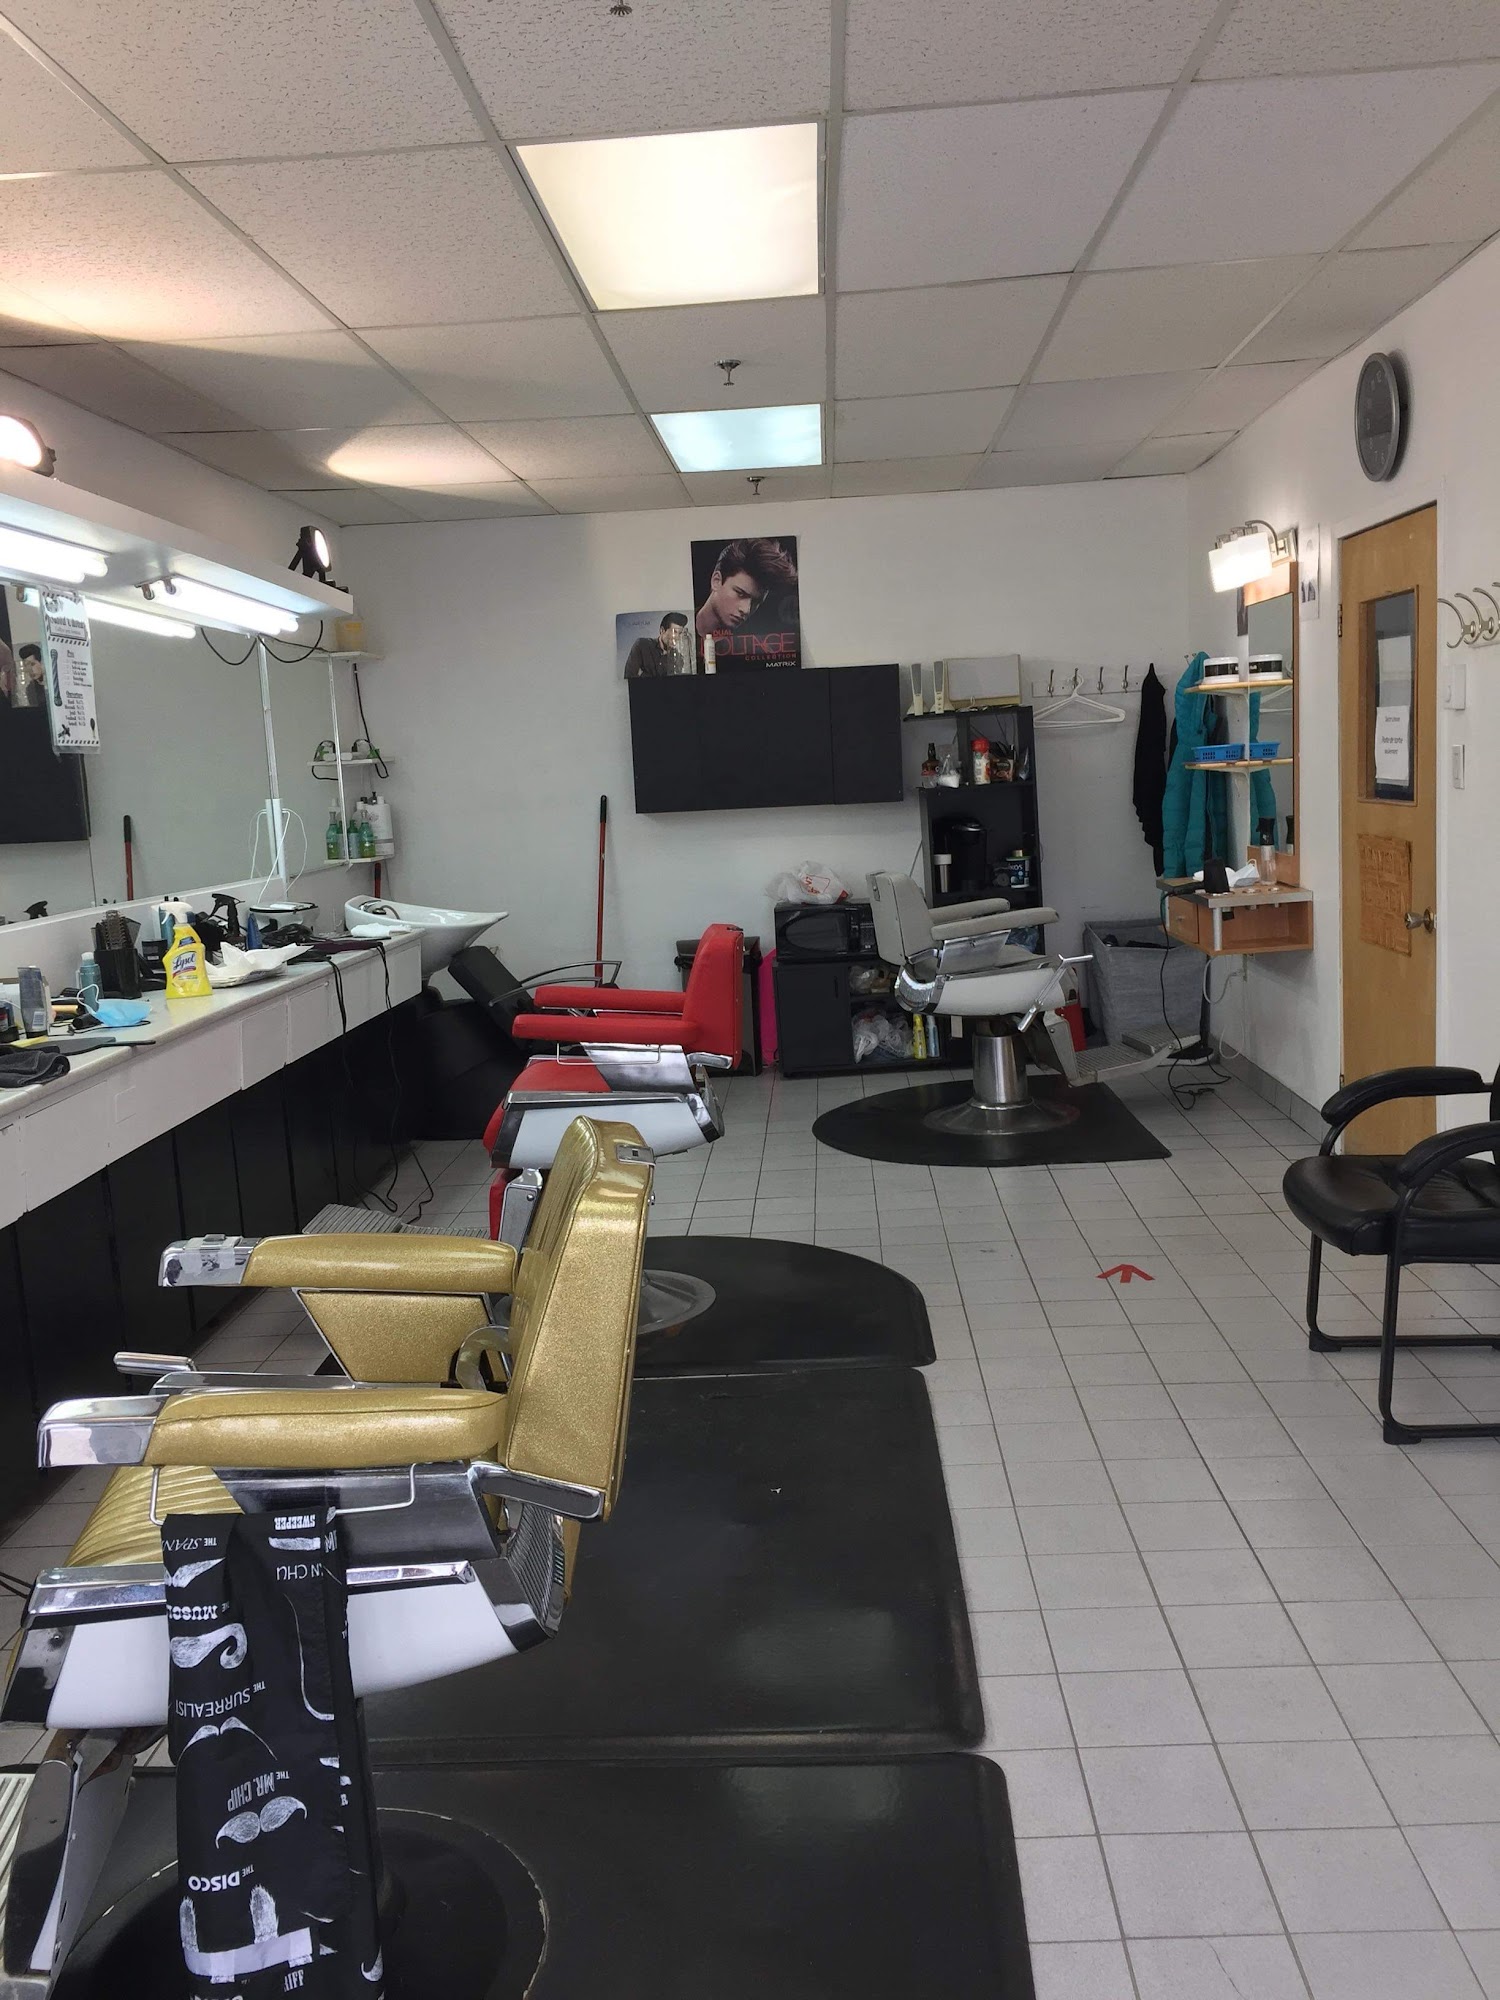 Salon Barbier Union 115 Rue Perreault E, Rouyn-Noranda Quebec J9X 3C3